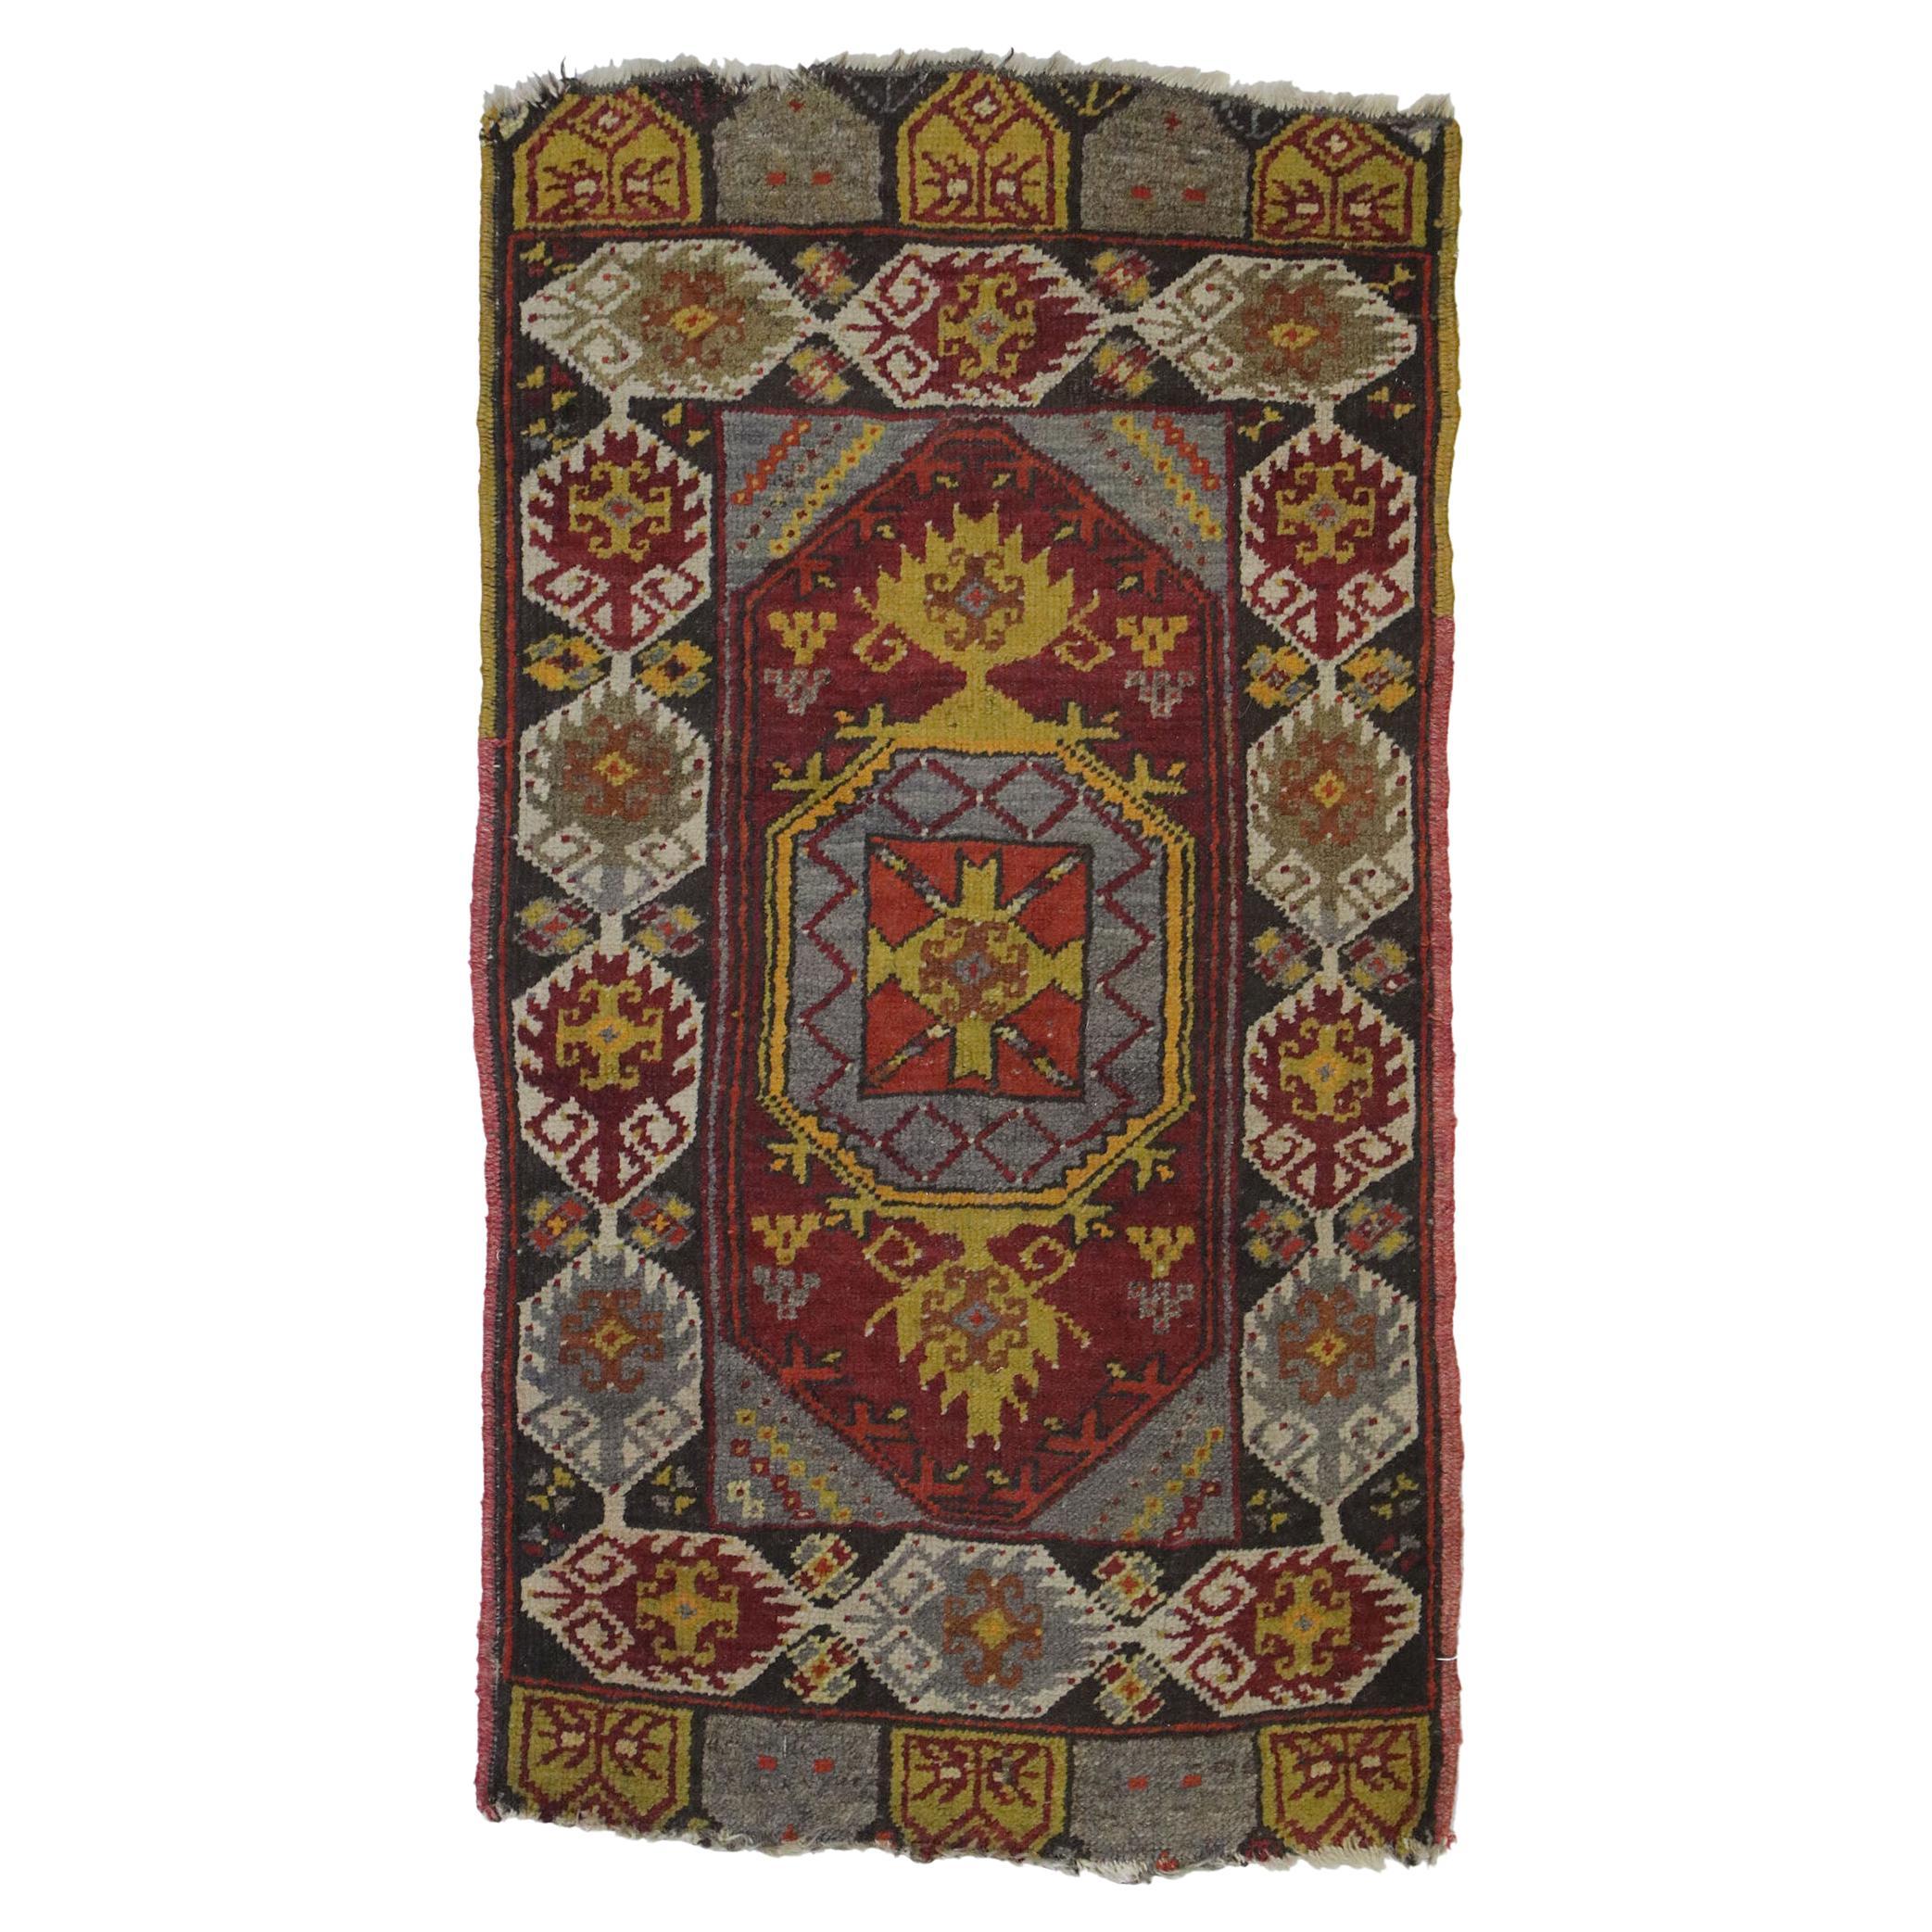 Ancien tapis turc d'Oushak de style tribal